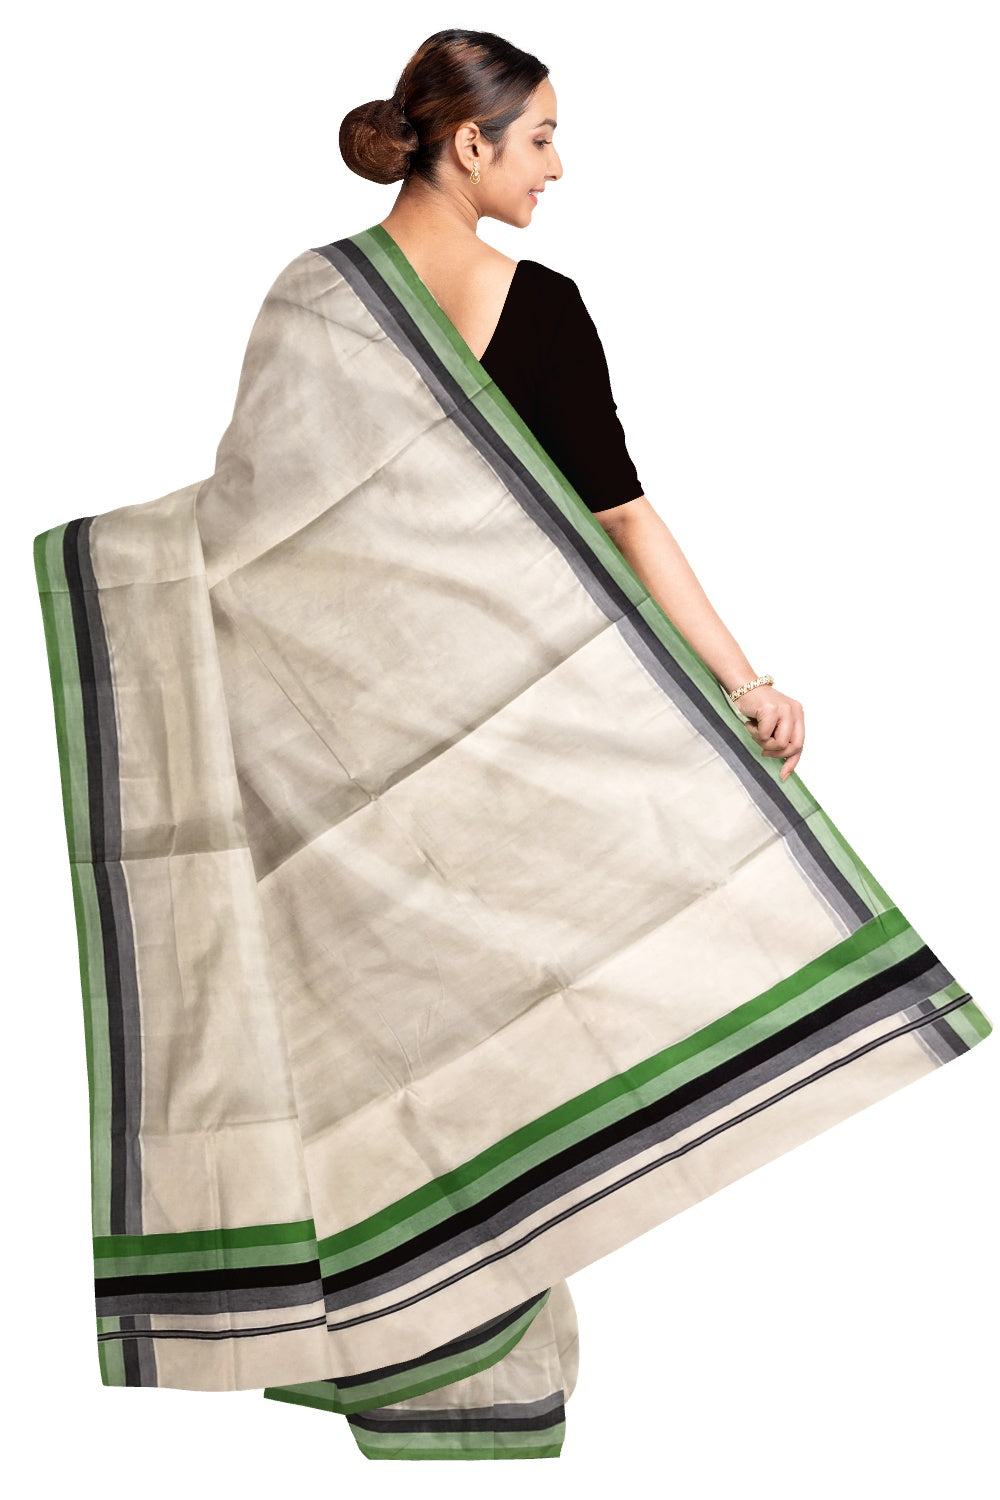 Kerala Cotton Saree with Green and Black Lines Border Design